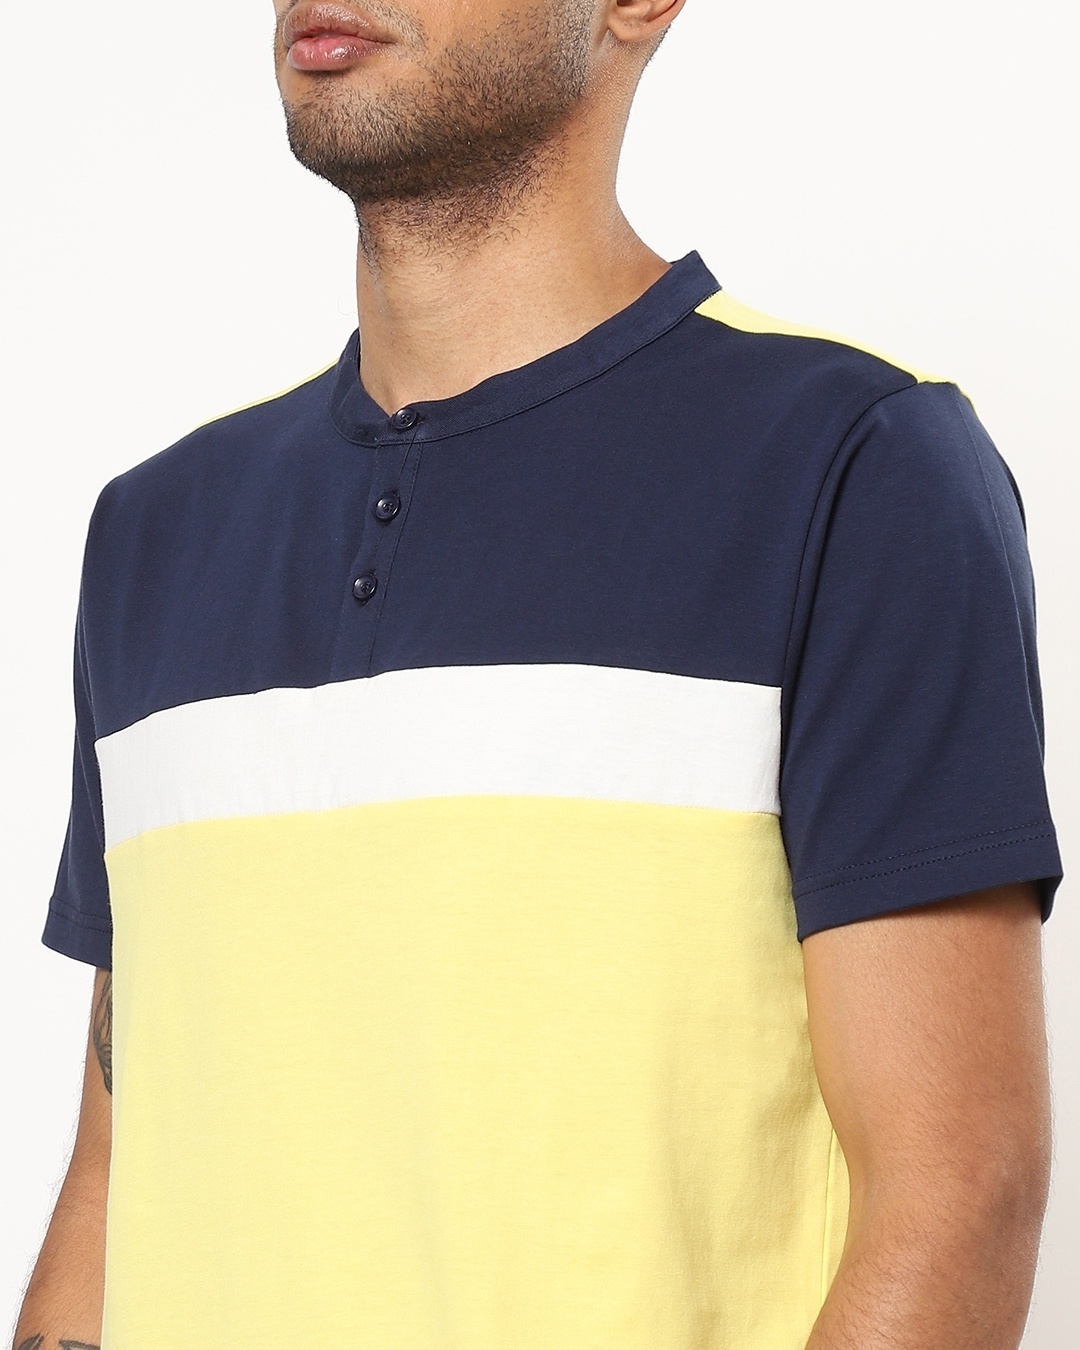 Shop Men's Yellow Color Block Henley T-shirt